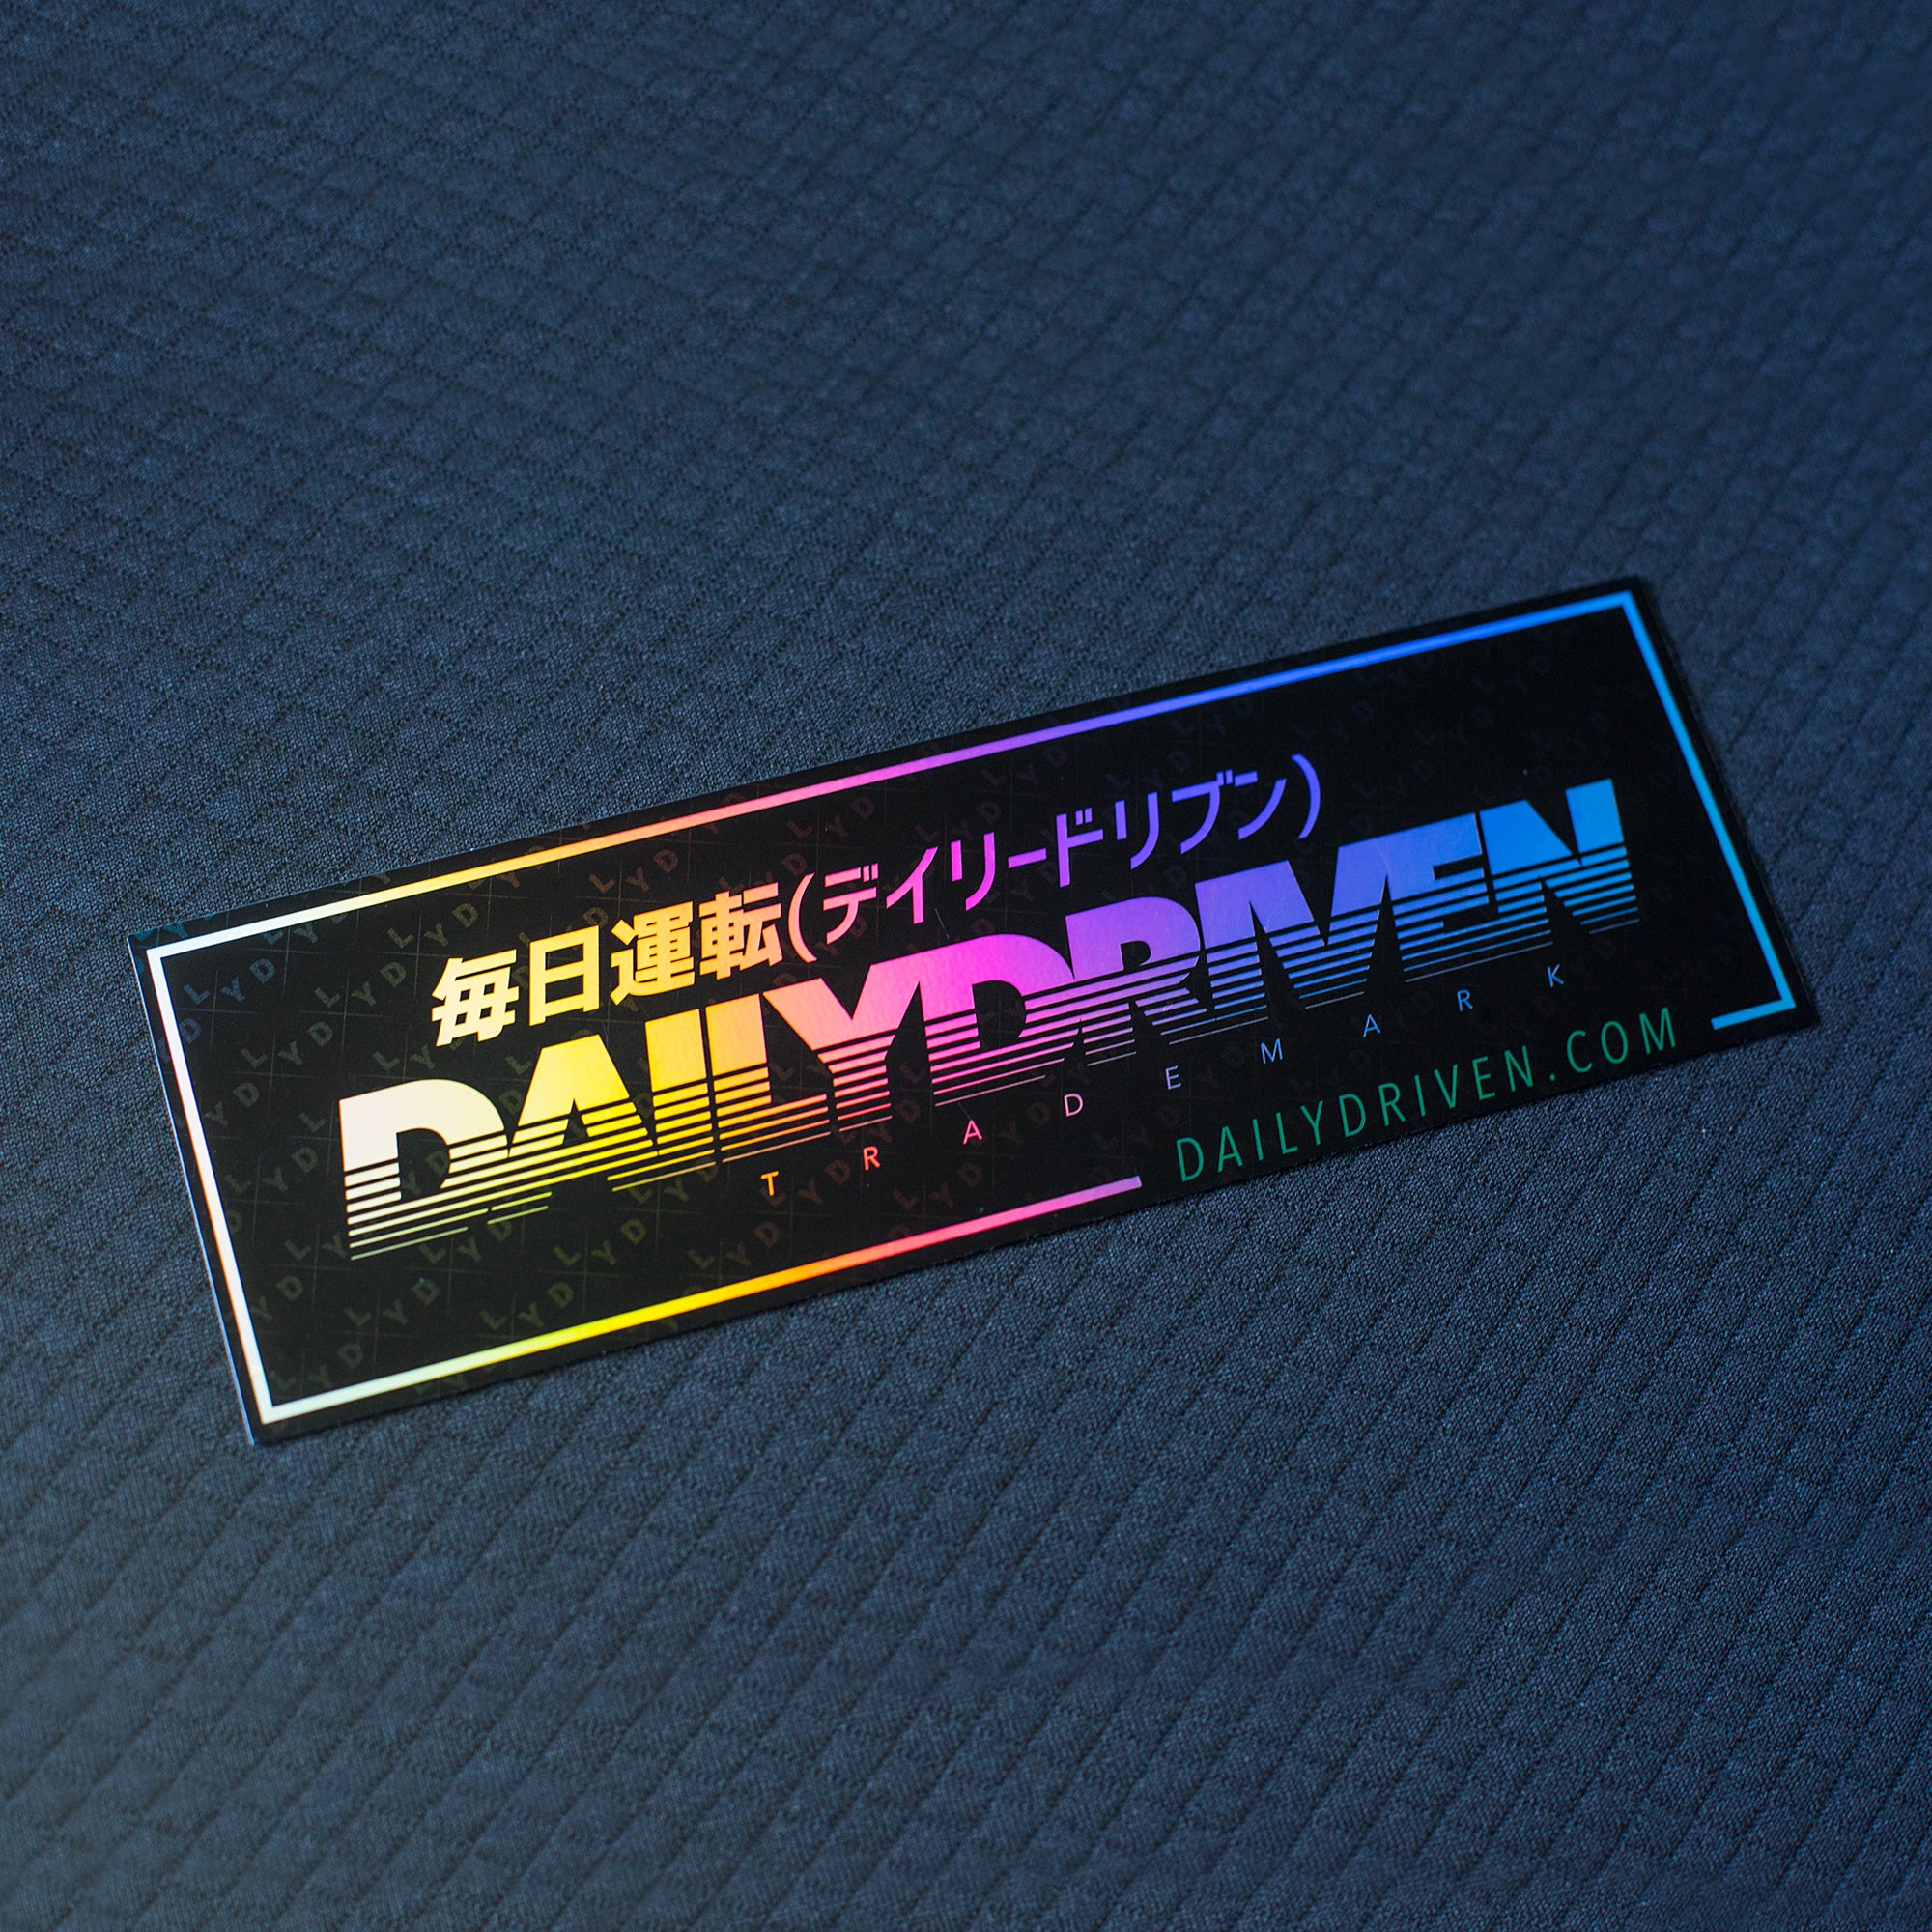 DailyDriven Trademark Bumper Sticker